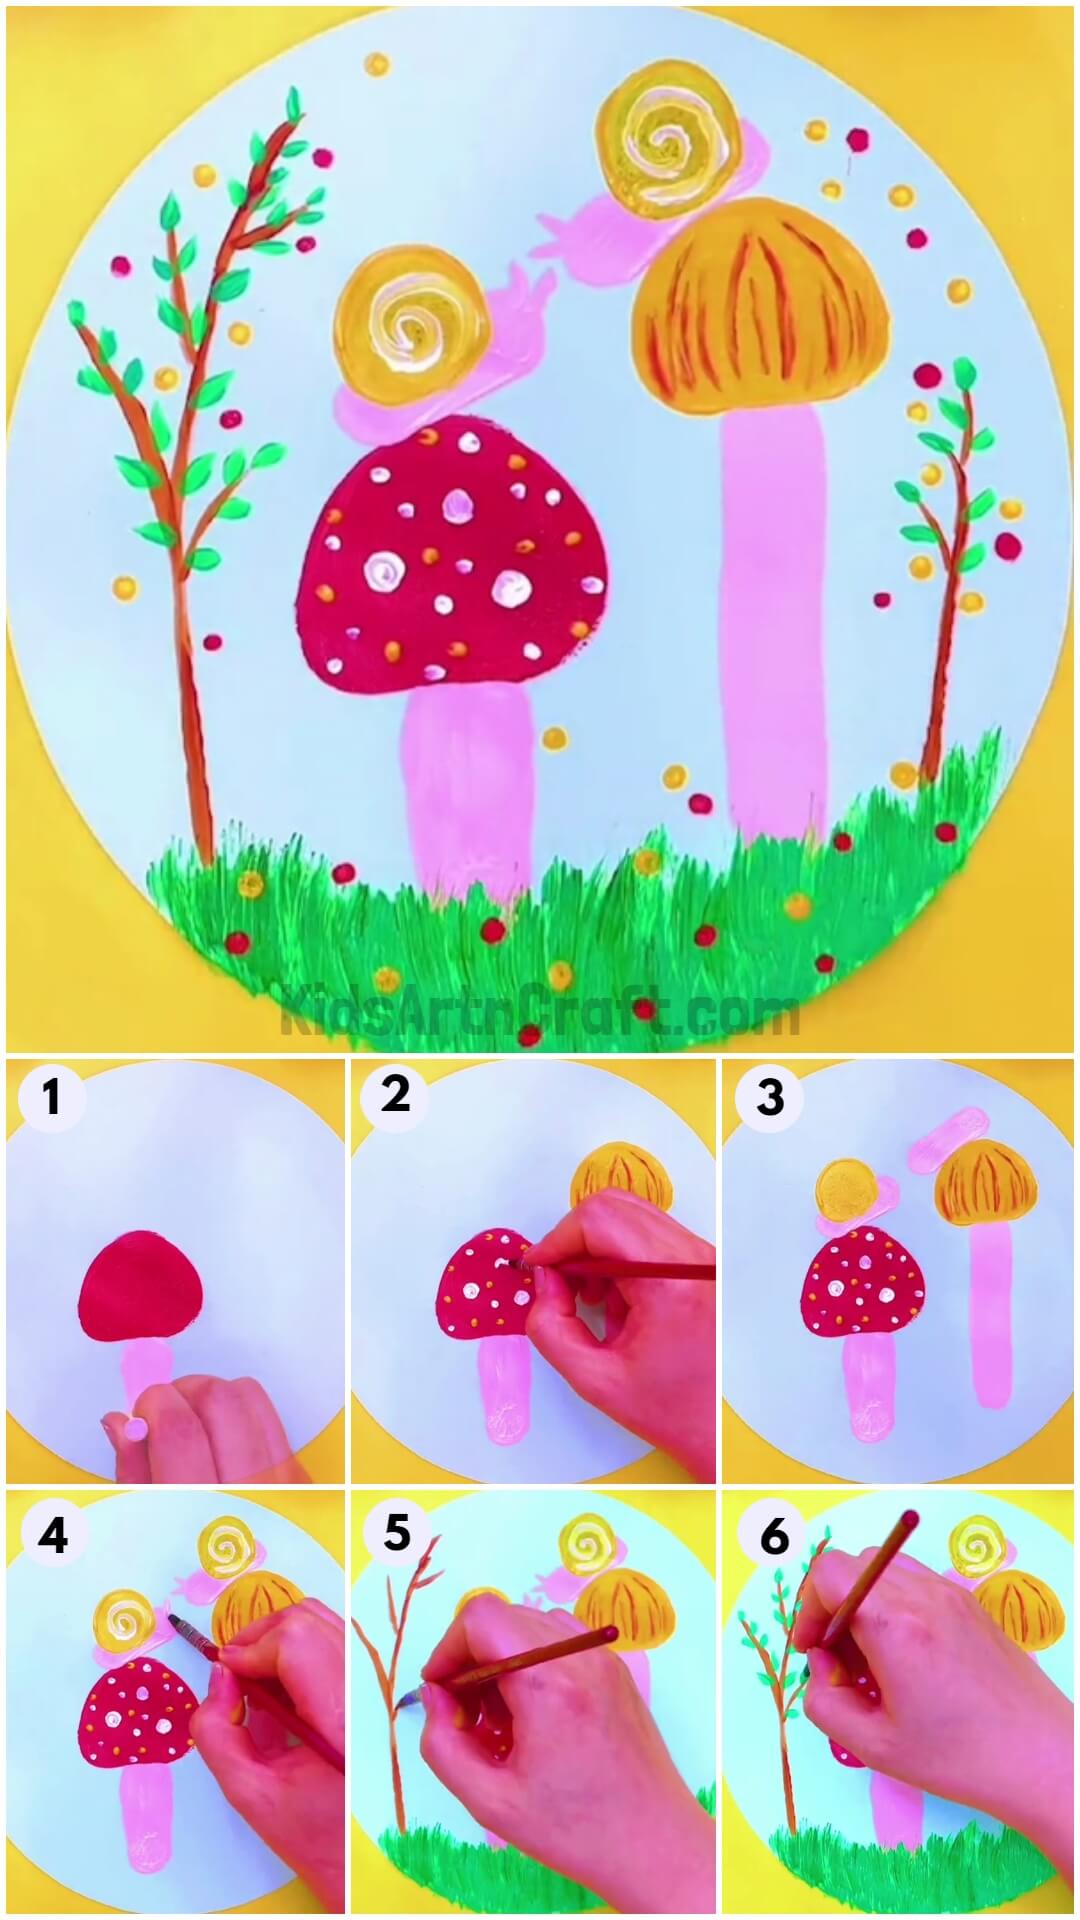 Snails Over Mushrooms Artwork Step by Step Tutorial For Kids